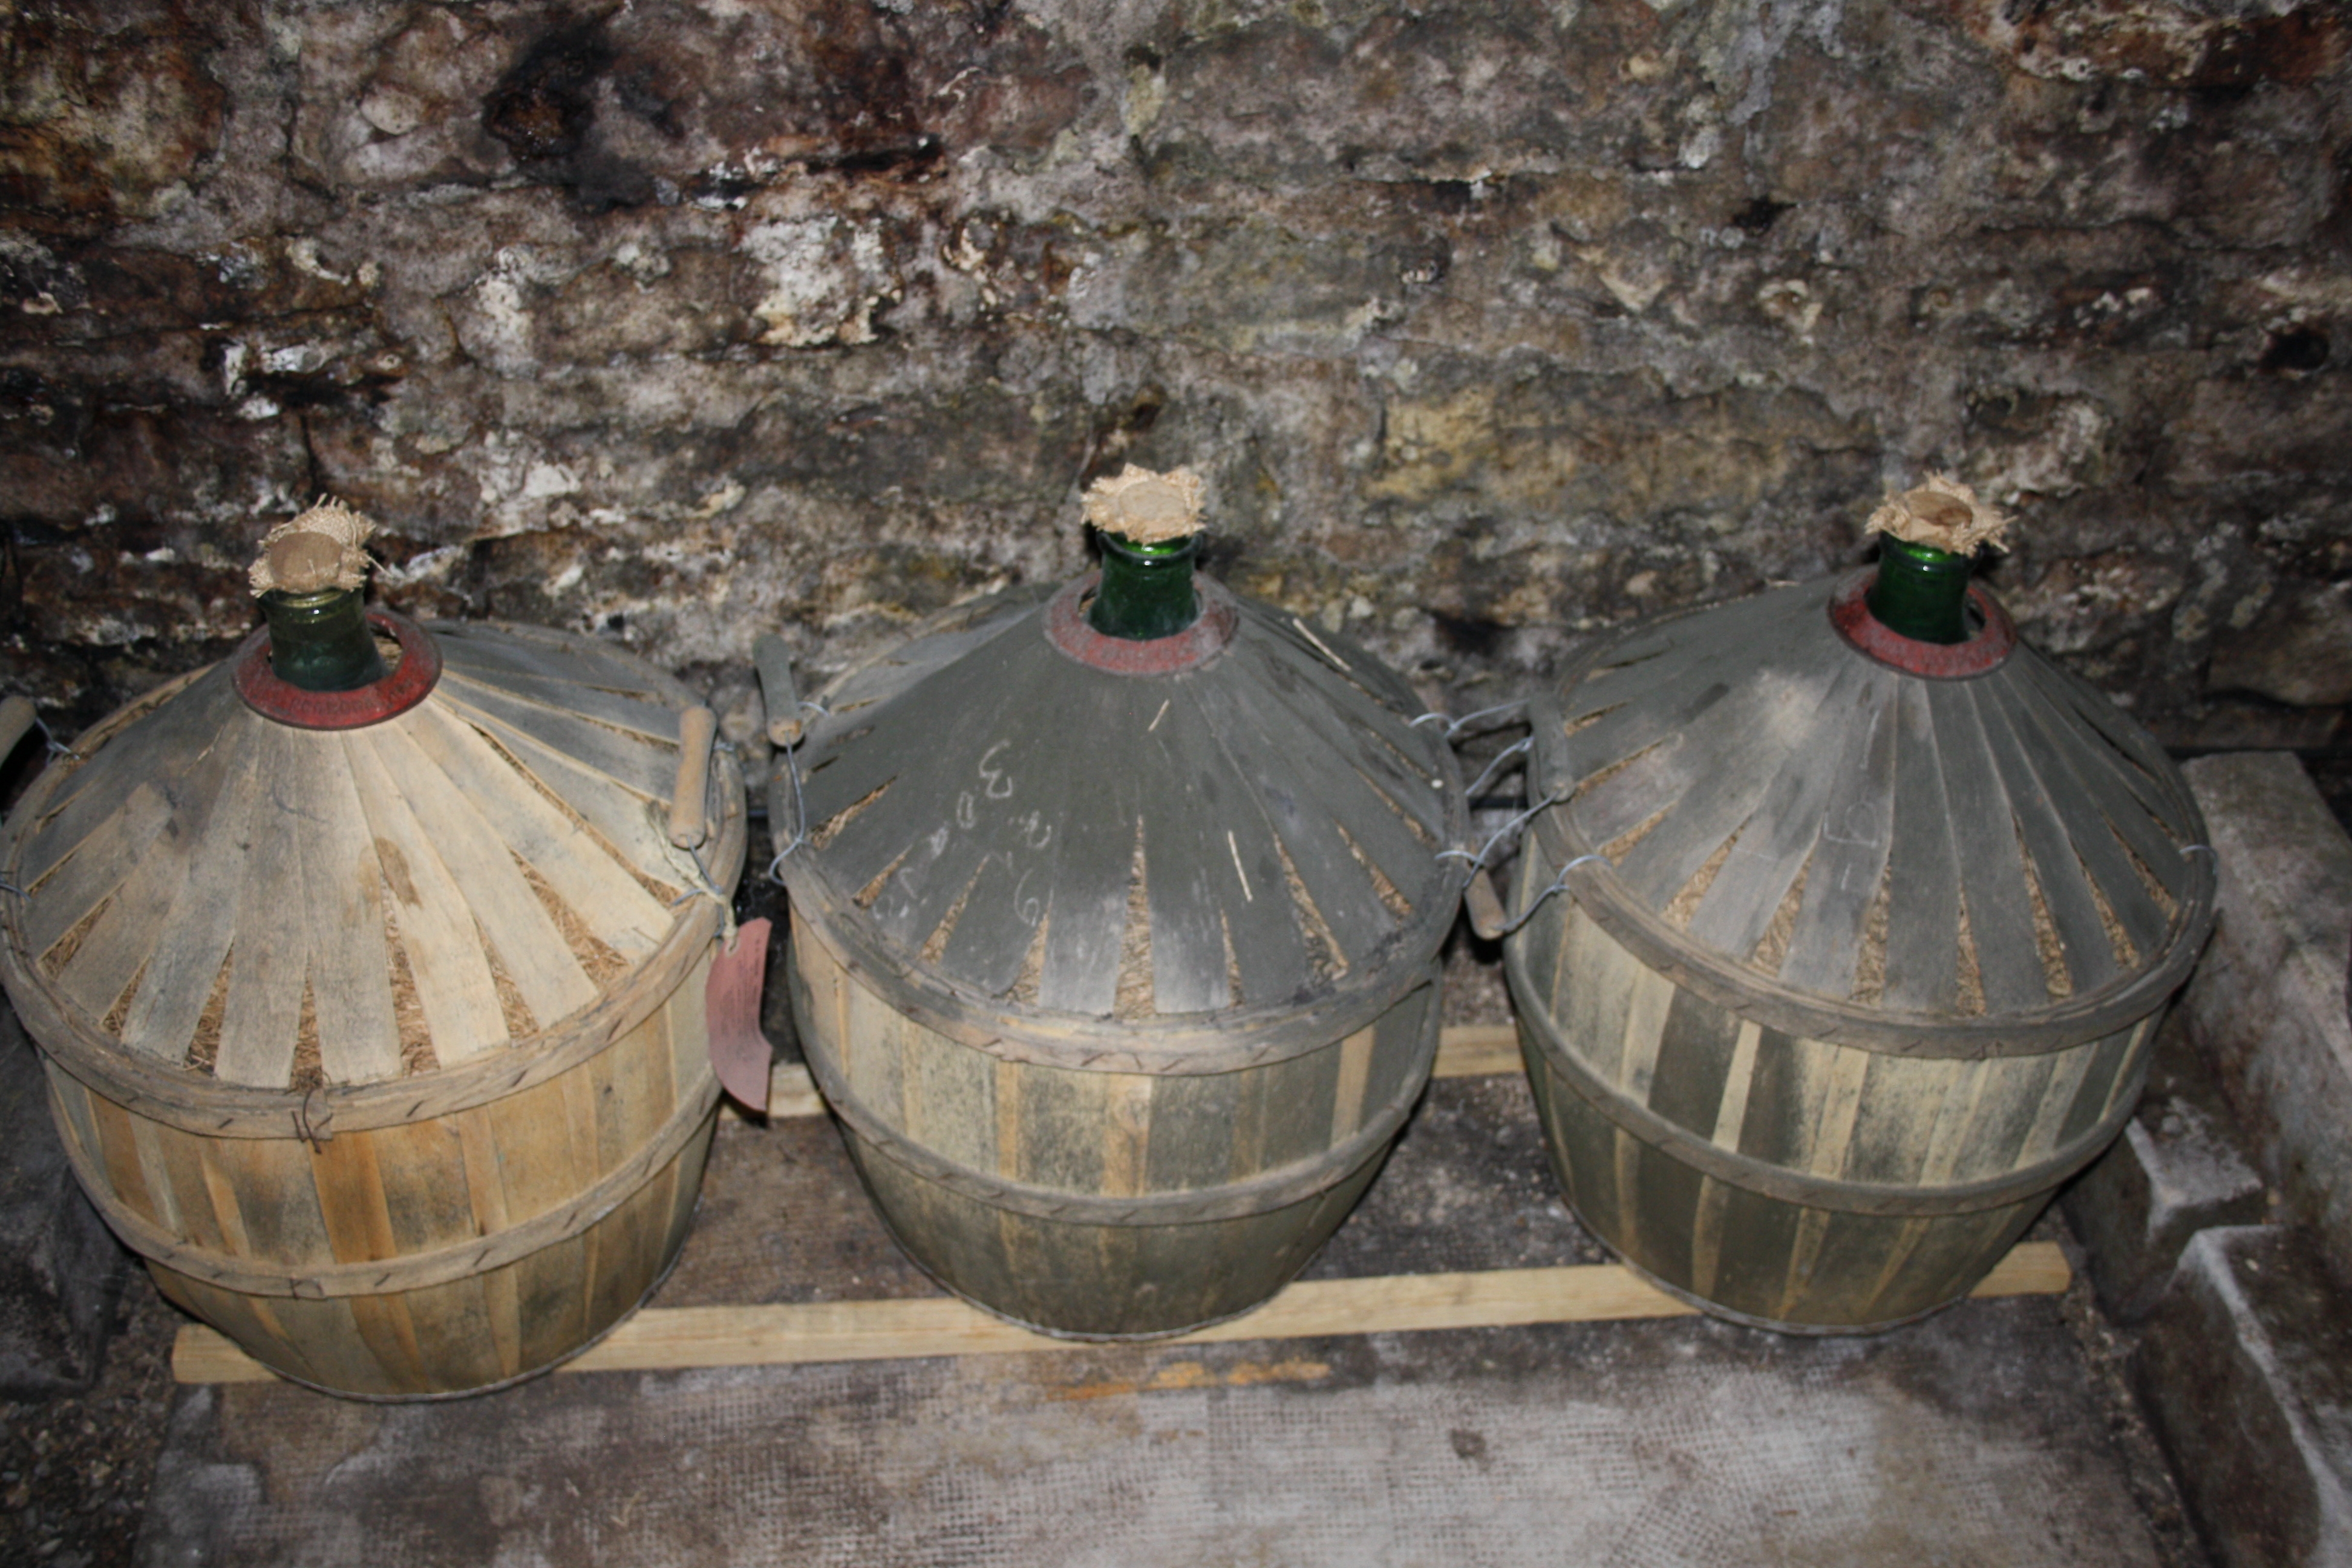 Glass jugs of Marc de Bourgogne